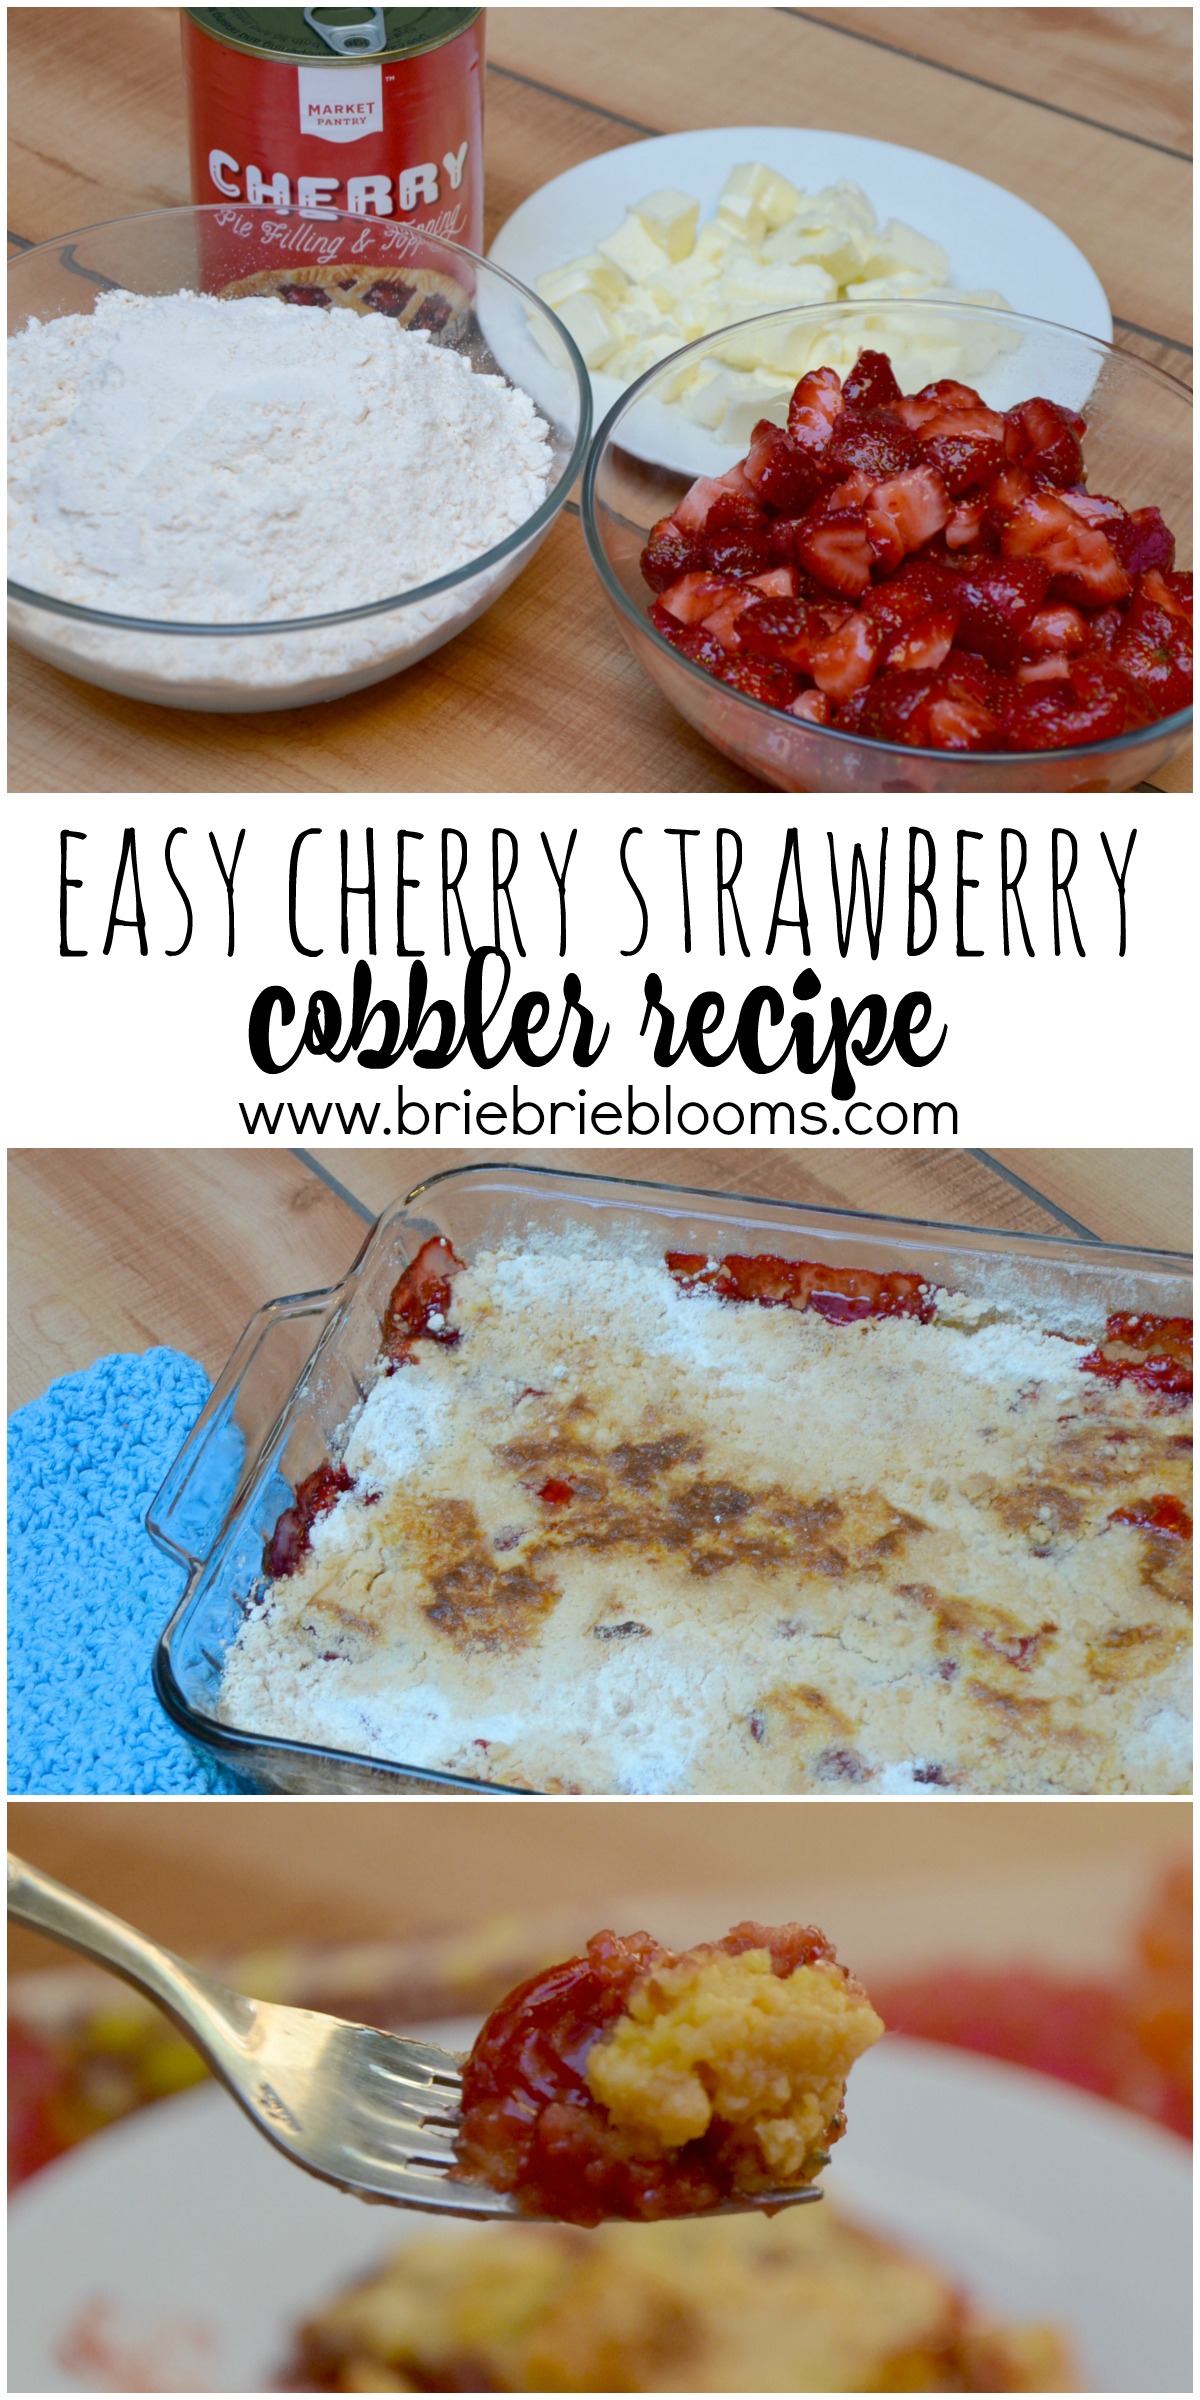 Easy Cherry Strawberry Cobbler recipe